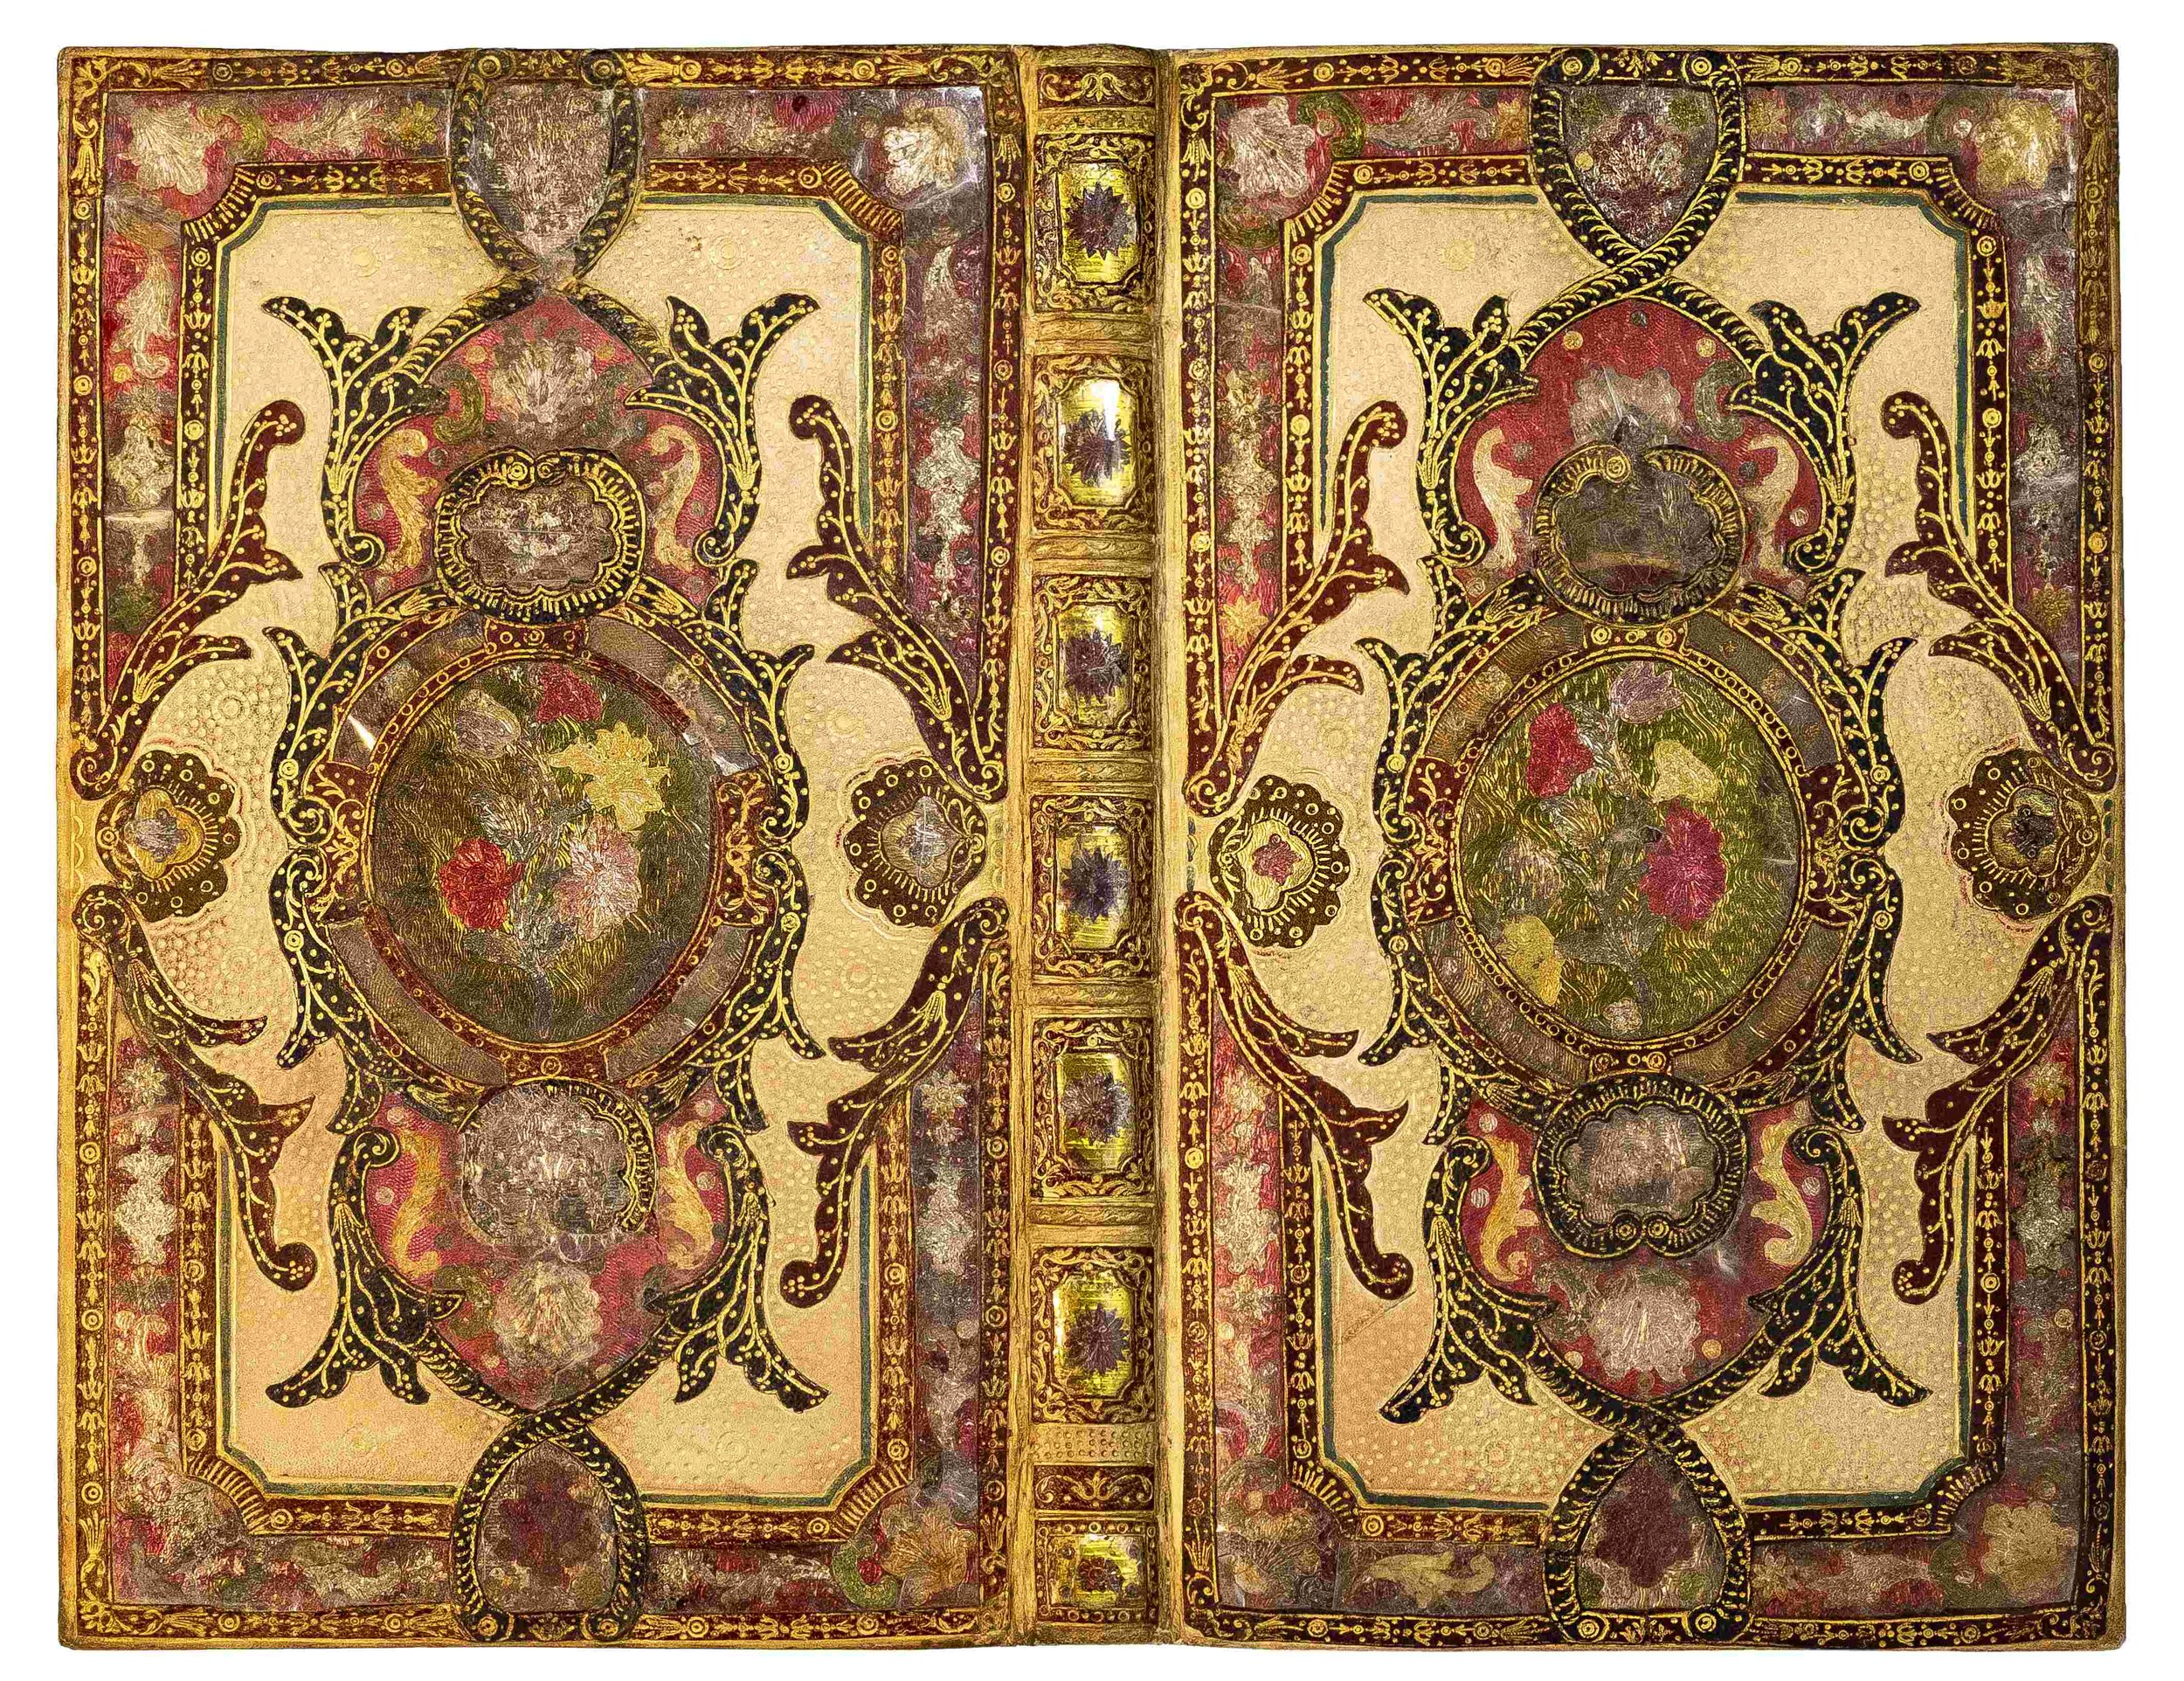 060-plantin-cortlnadt-bishop-Inlaid-Binding-morocco-mosaic-reliure-maroquin-18th-century.jpg